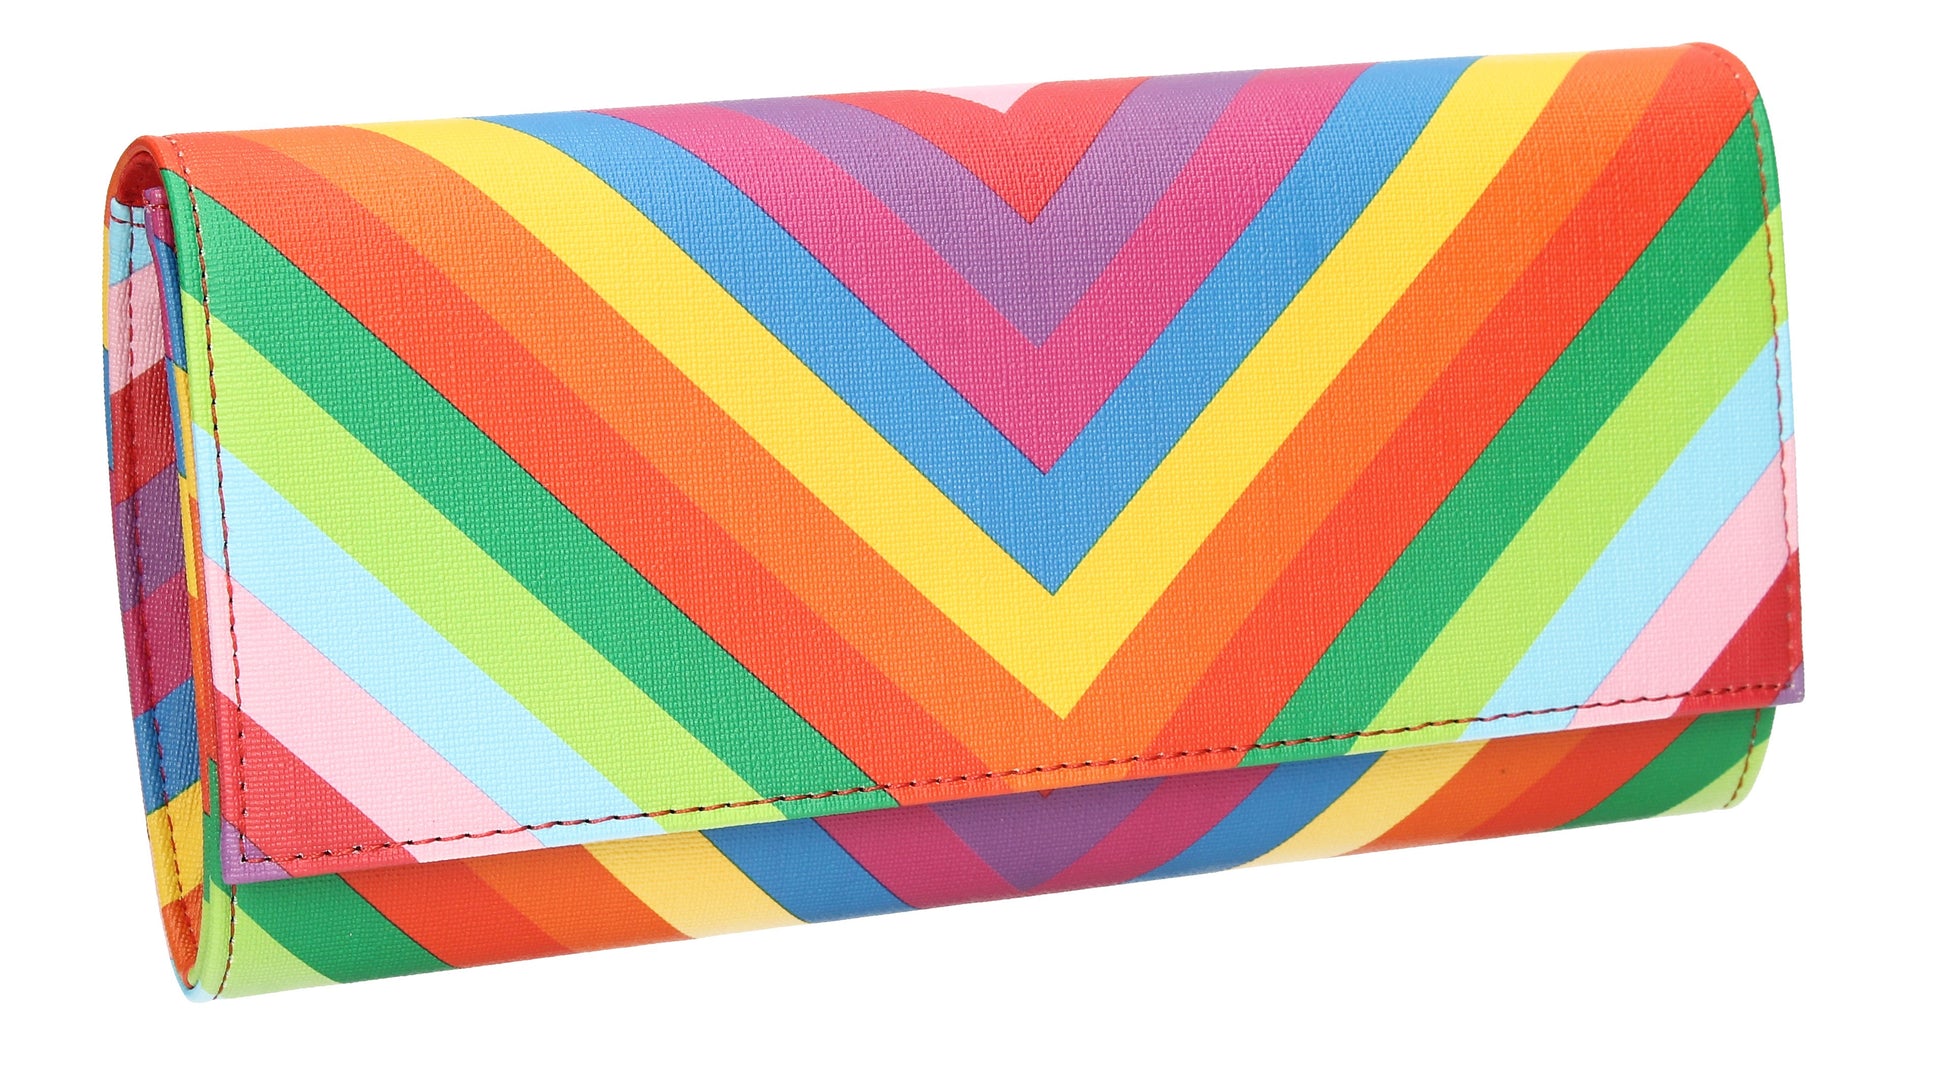 SWANKYSWANS Margot Clutch Bag Multicolour Cute Cheap Clutch Bag For Weddings School and Work